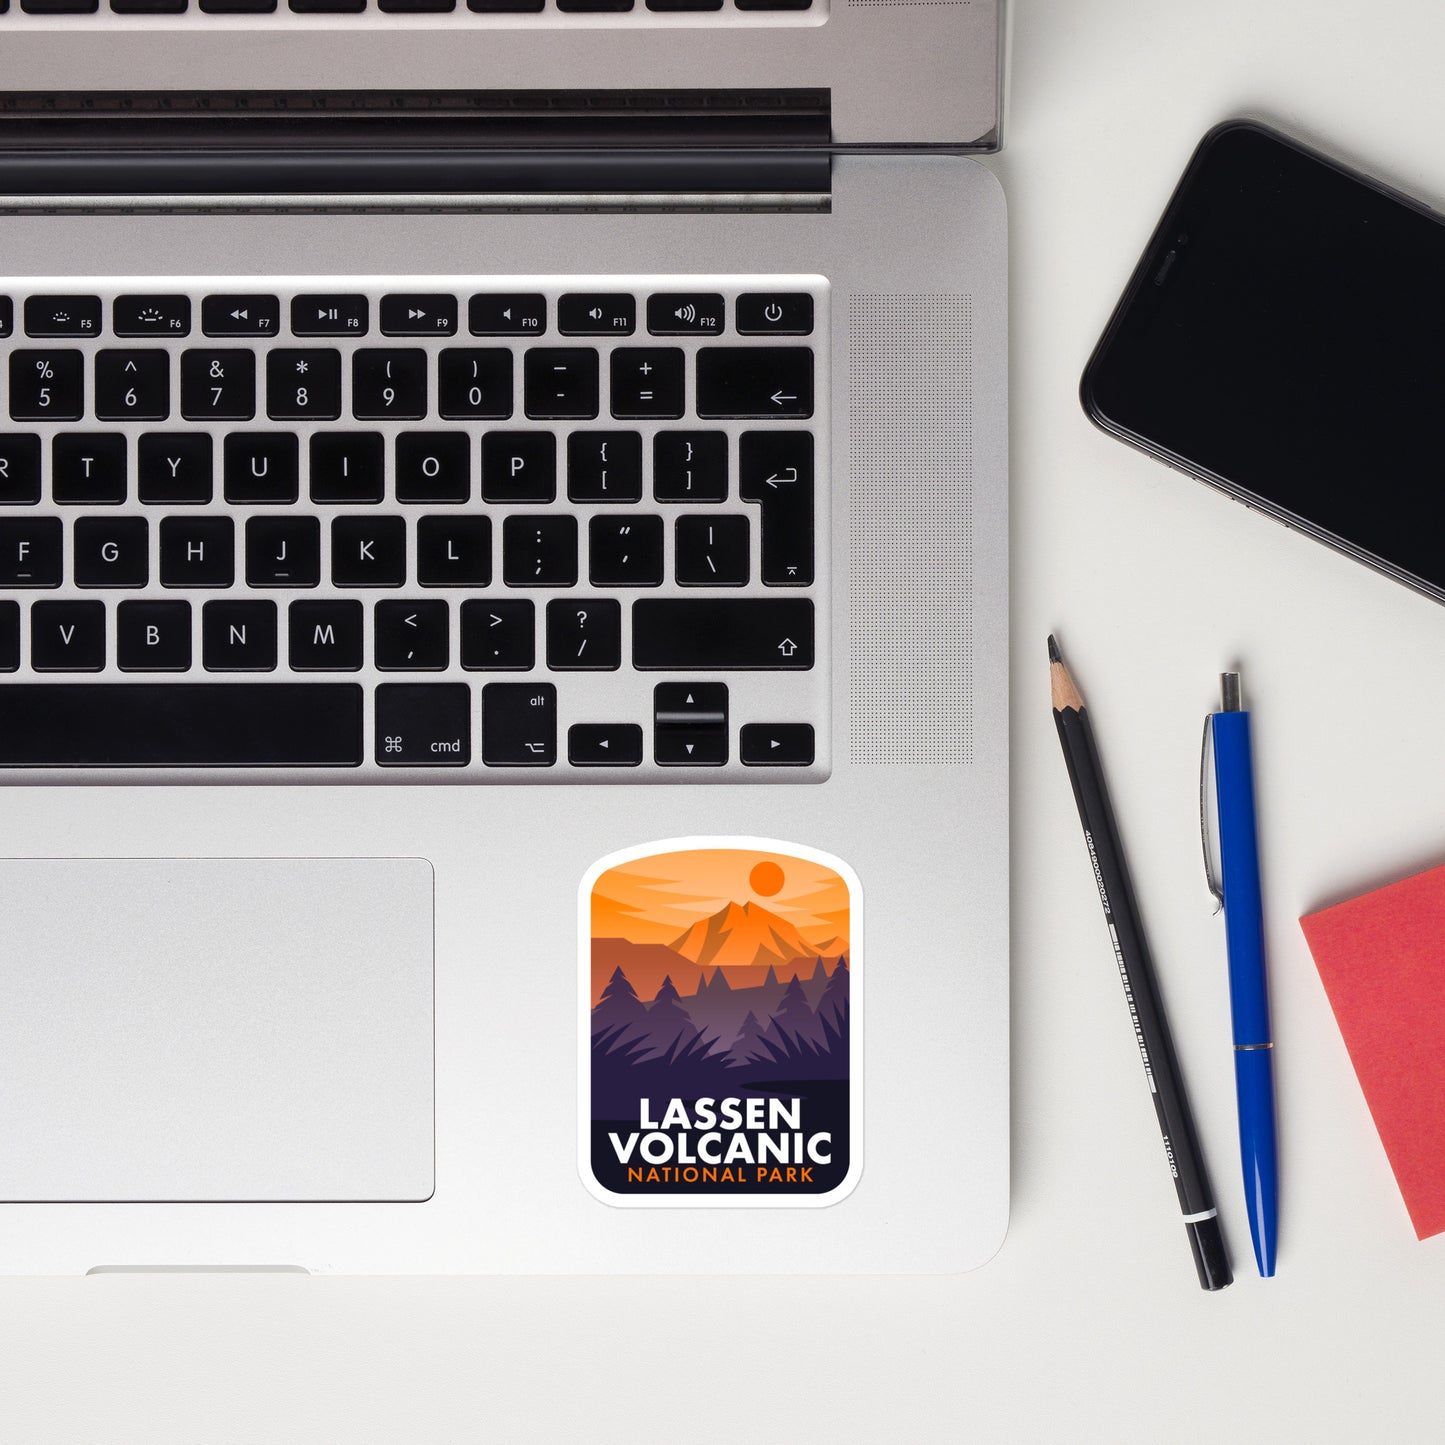 A sticker of Lassen Volcanic National Park on a laptop